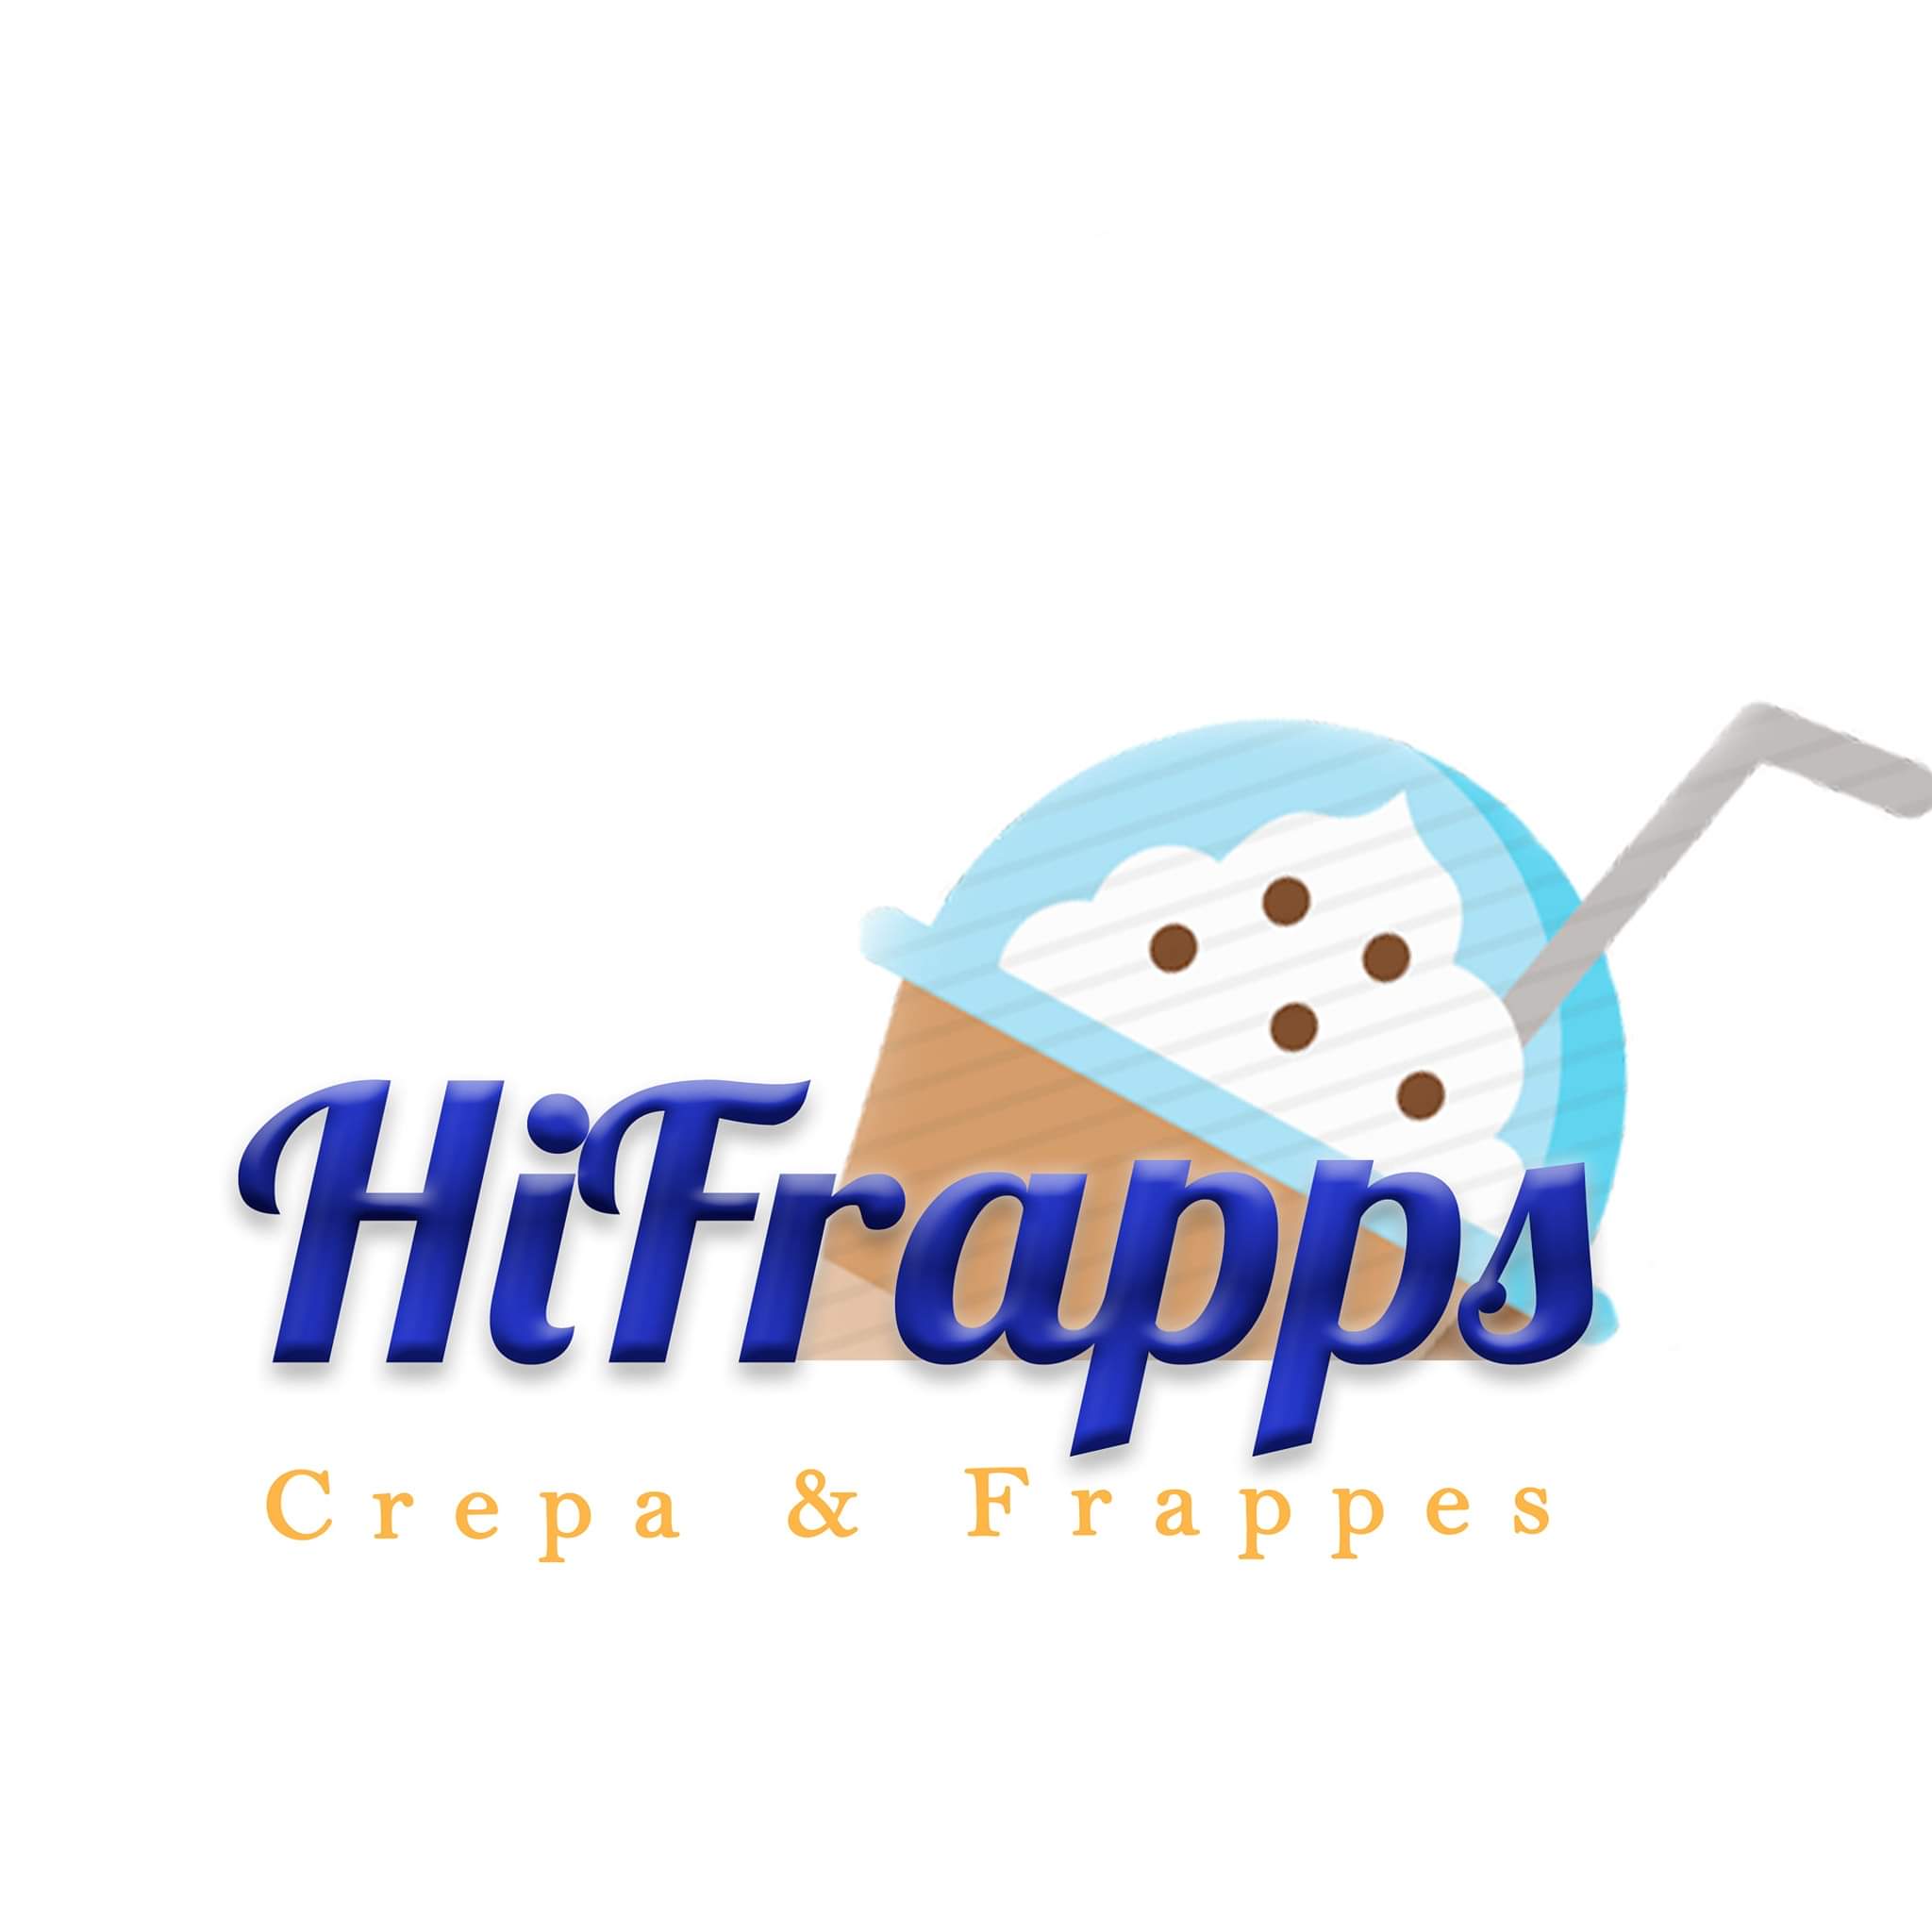 Hifrapps